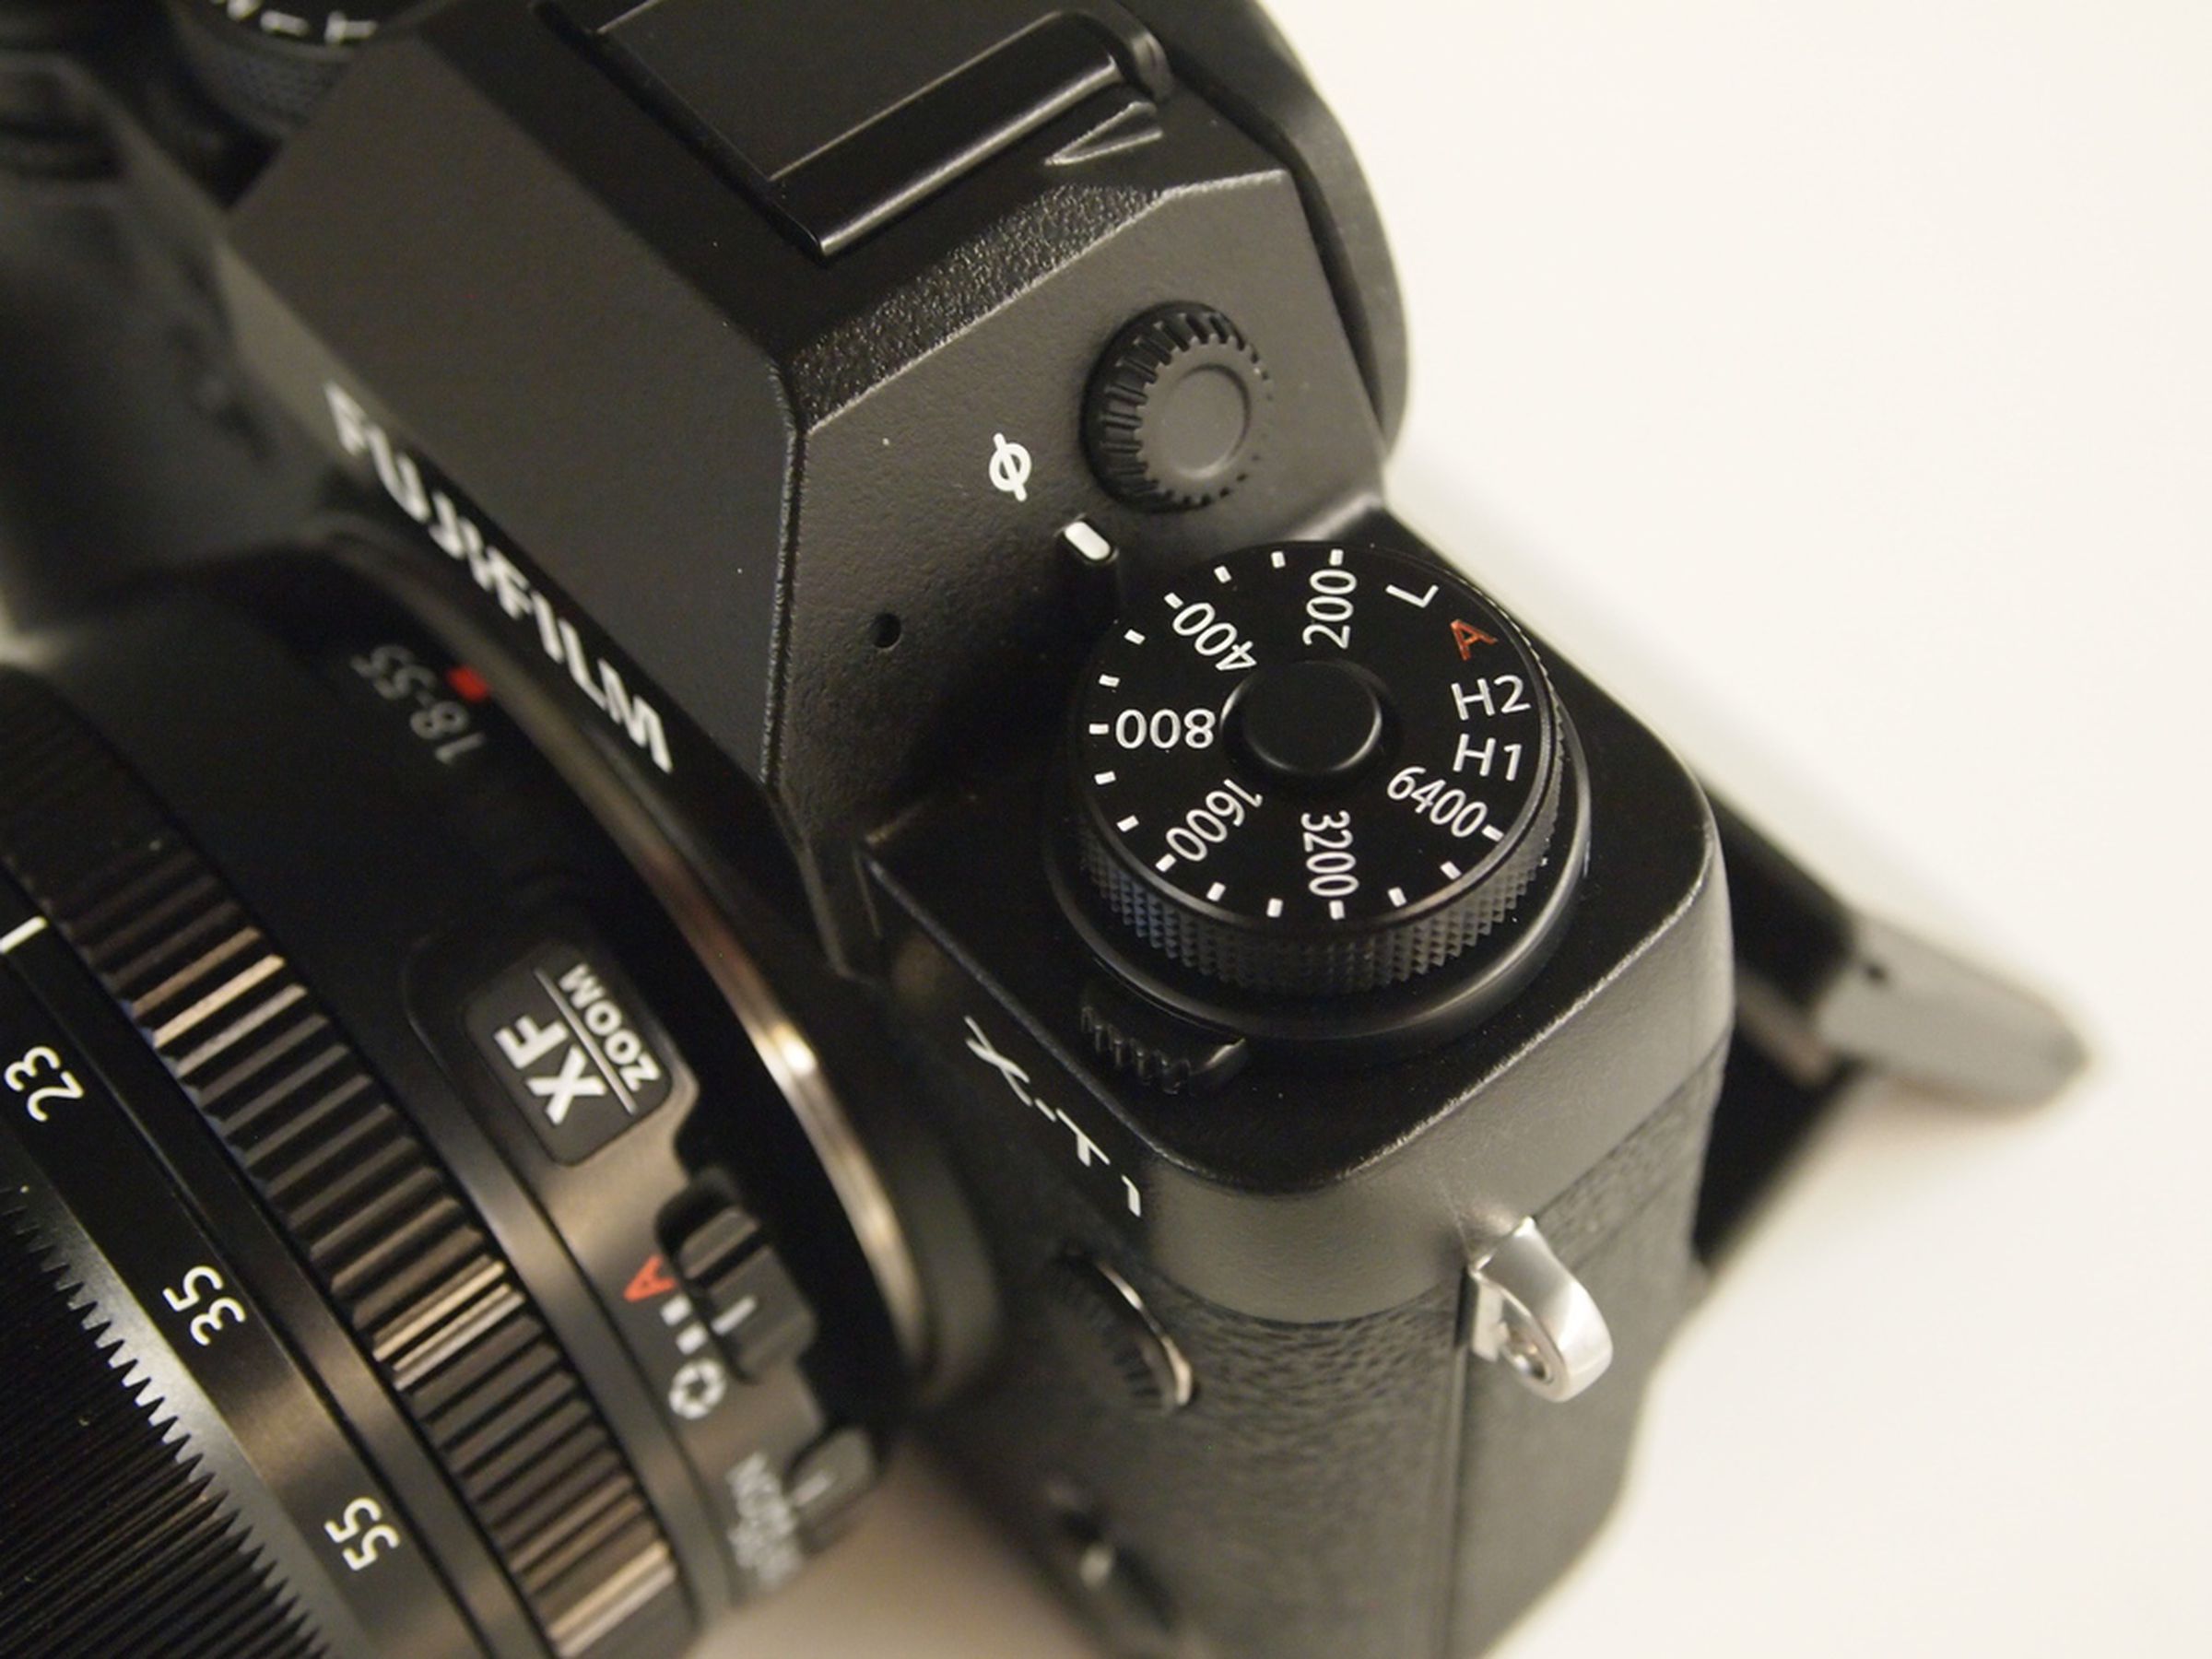 Fujifilm X-T1 close-up shots